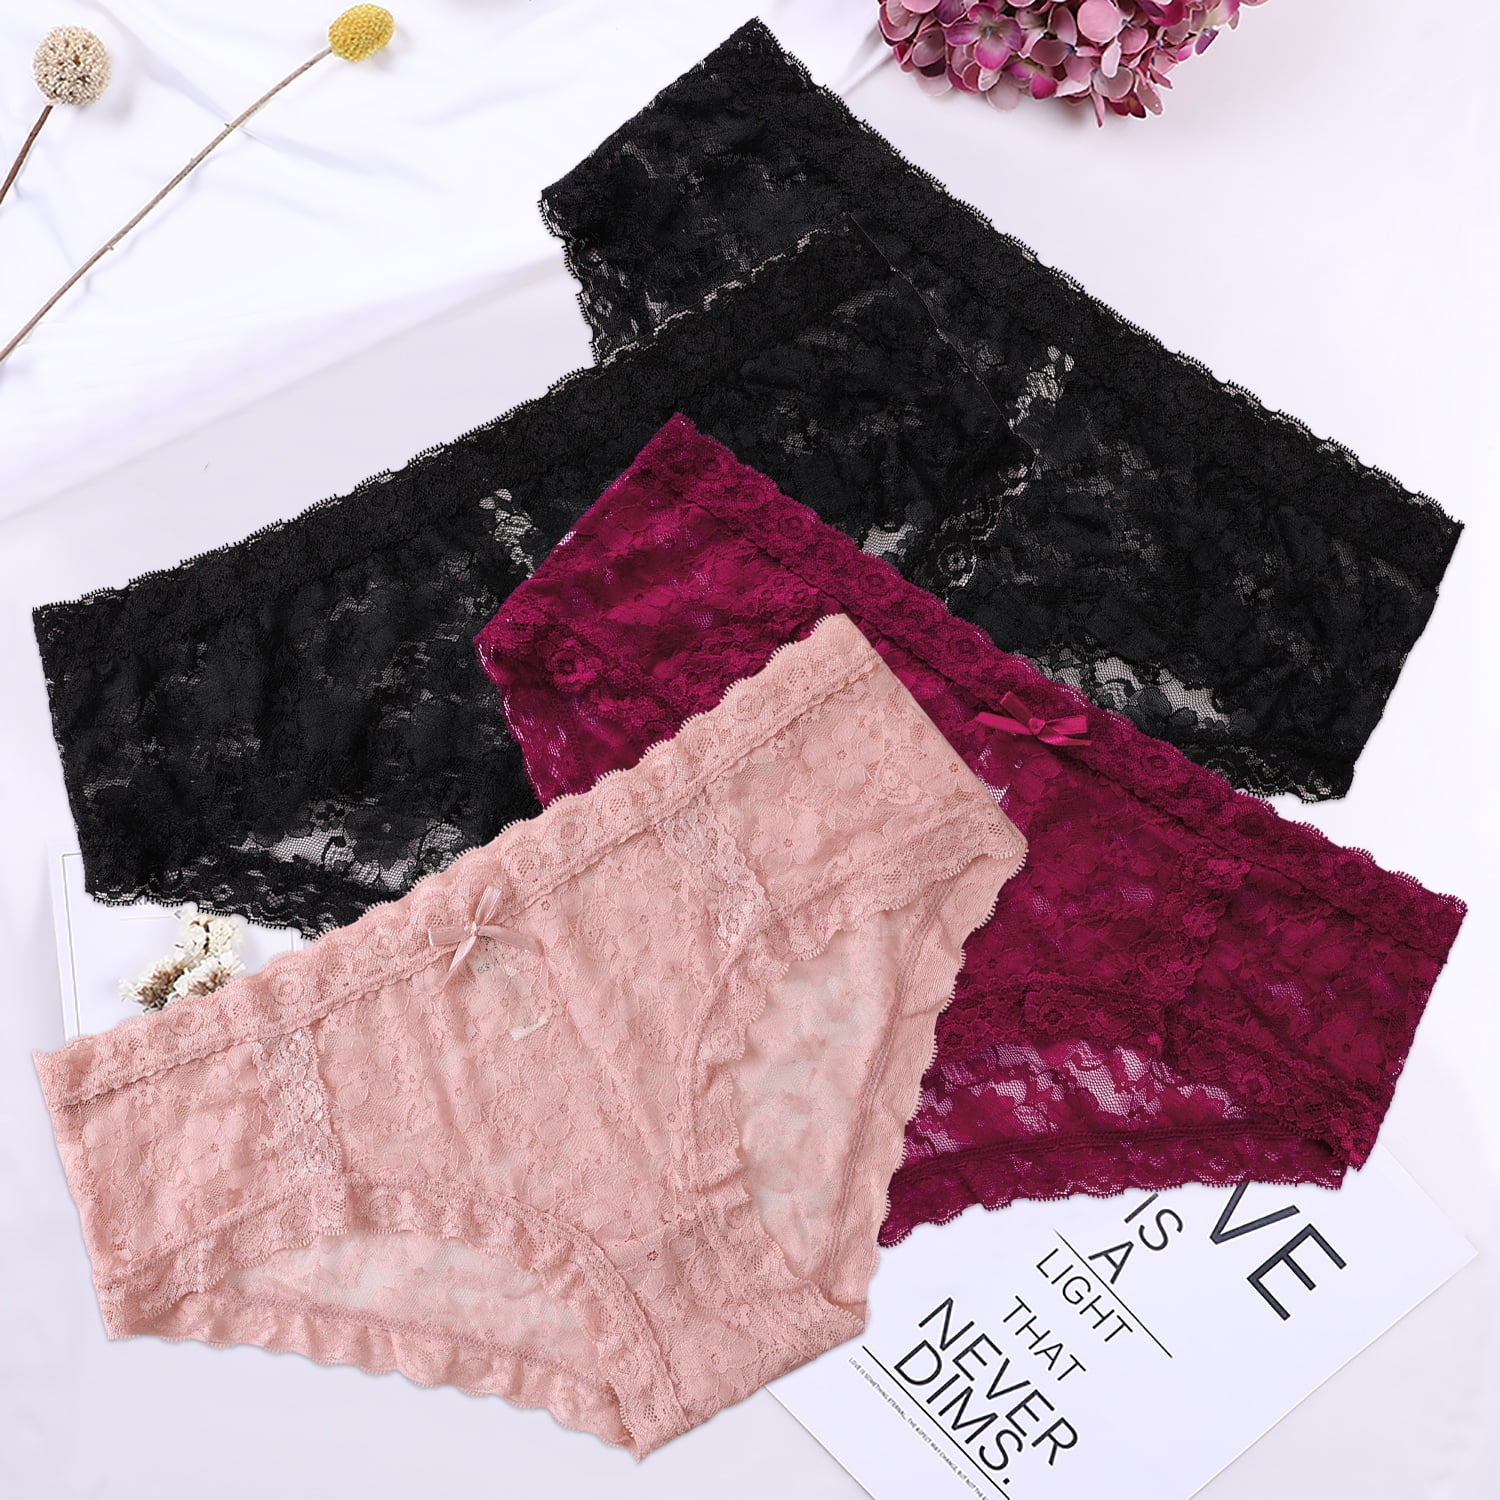 Men's Pink Organic Cotton Thong - Eco-Friendly Underwear - Body Aware